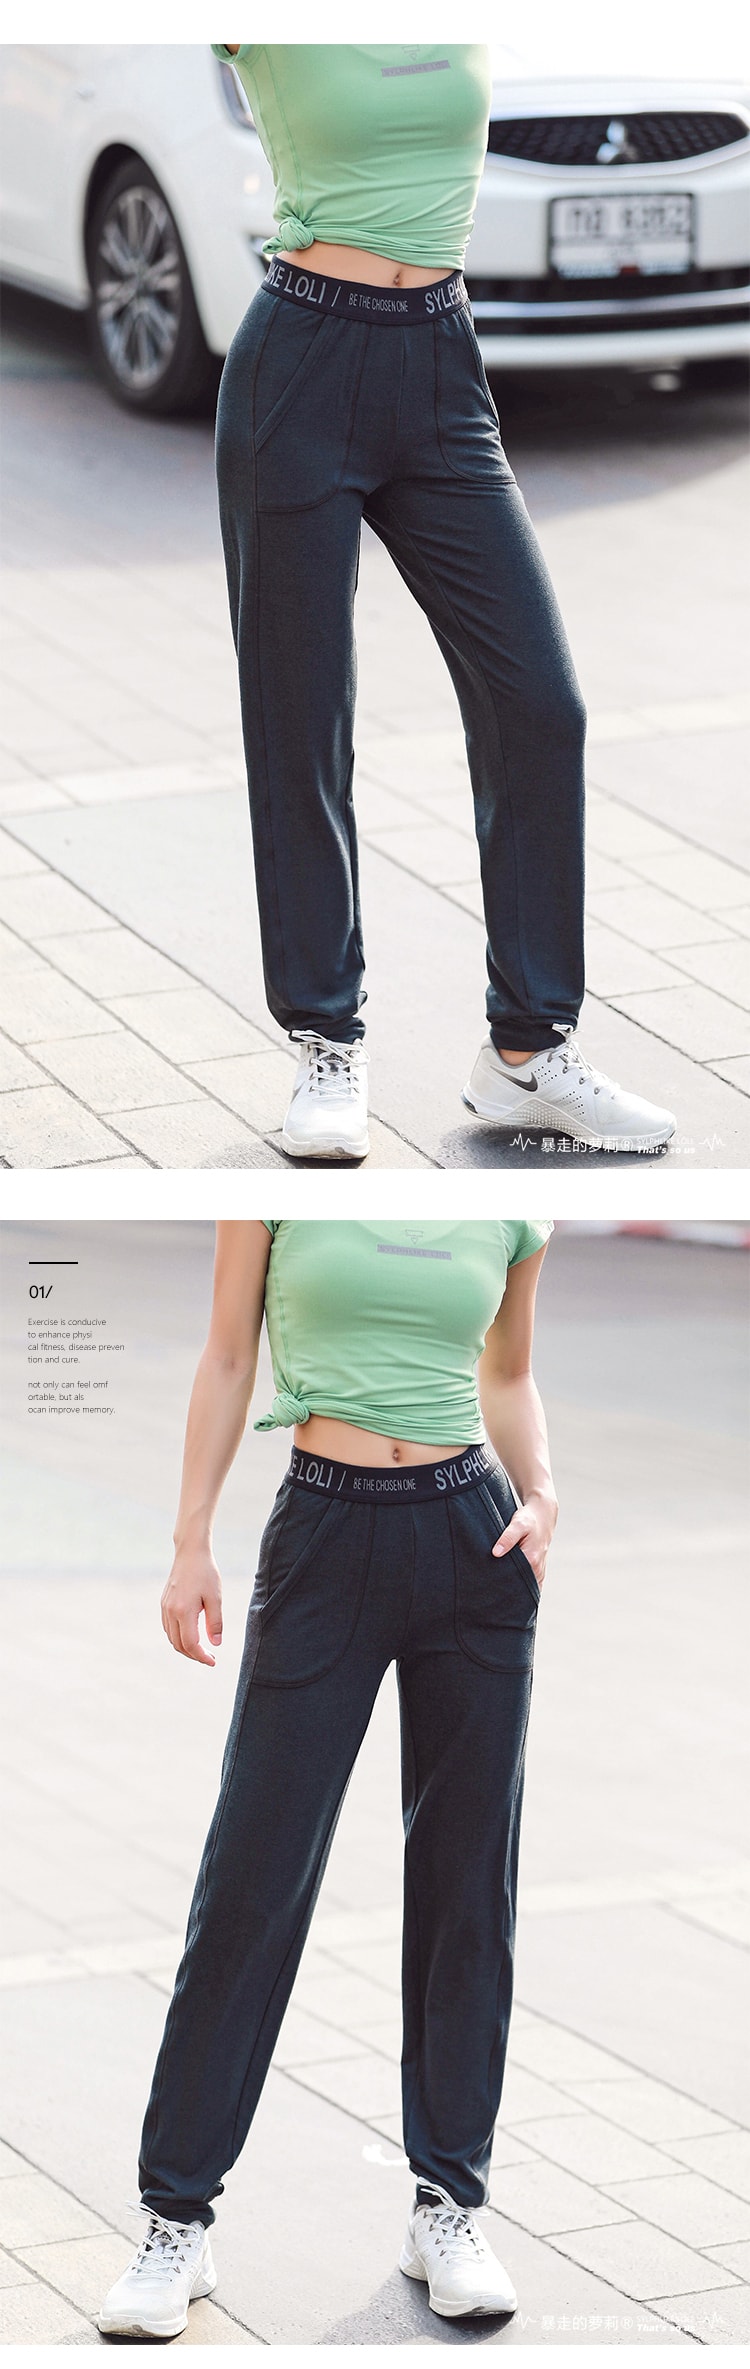  Sports Casual Elastic Pants For Running Yoga Train/Black#/M